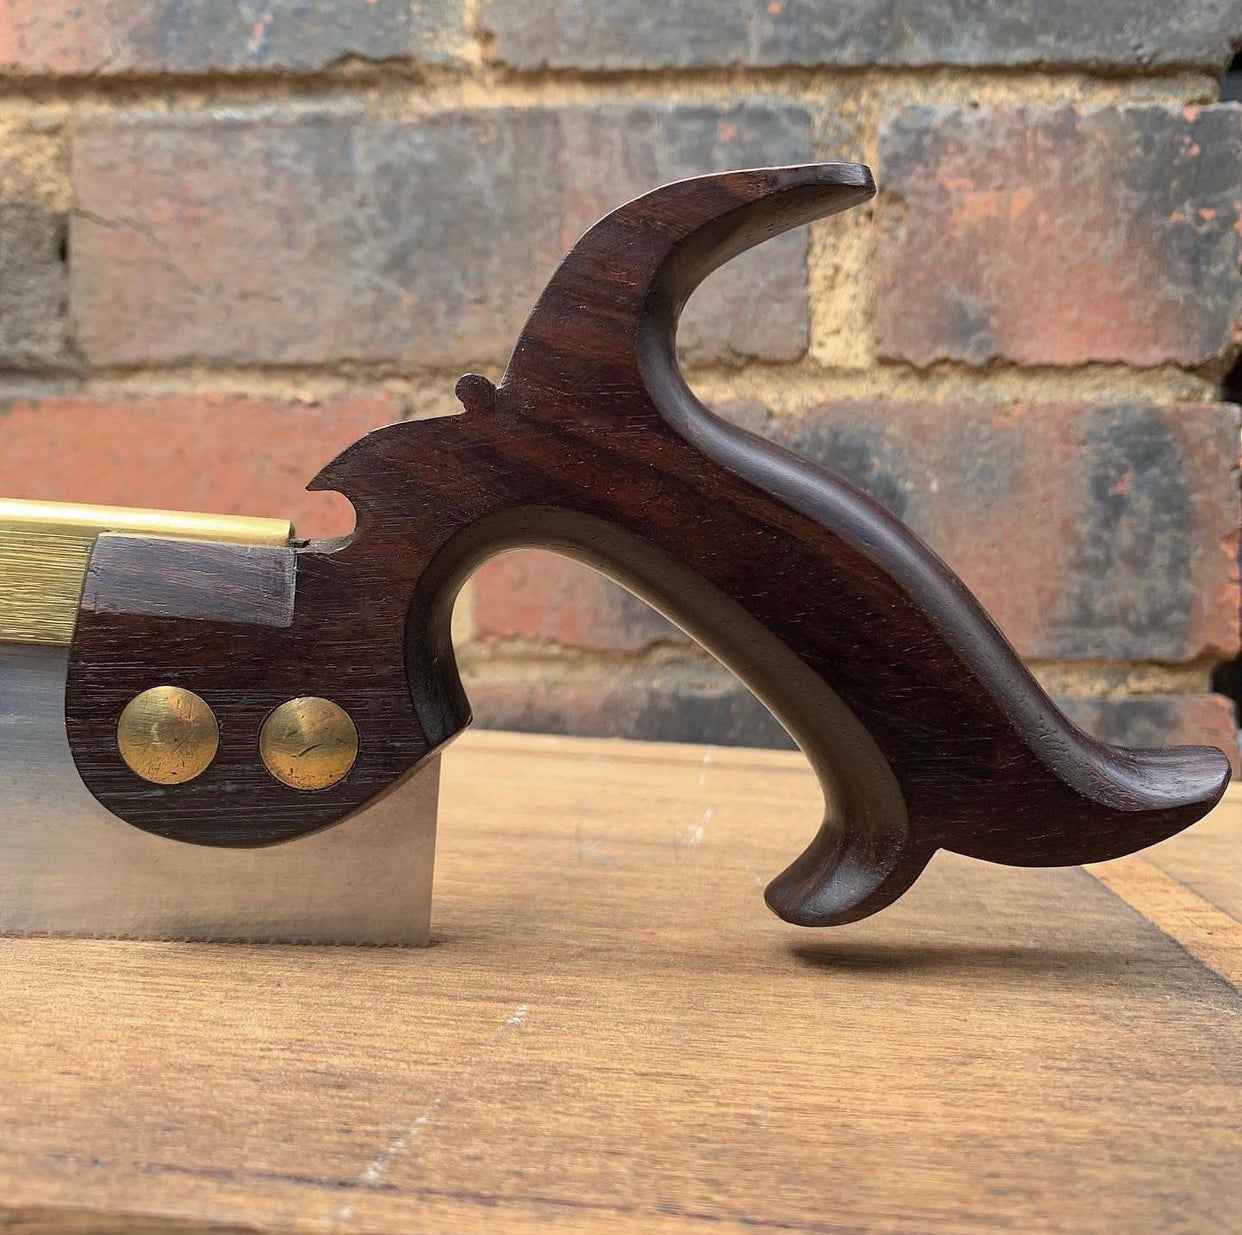 Heritage Saw saws Melbourne Australia bespoke hand made Australian tool dovetail carcass tenon timber timbers wood mortise Ebony